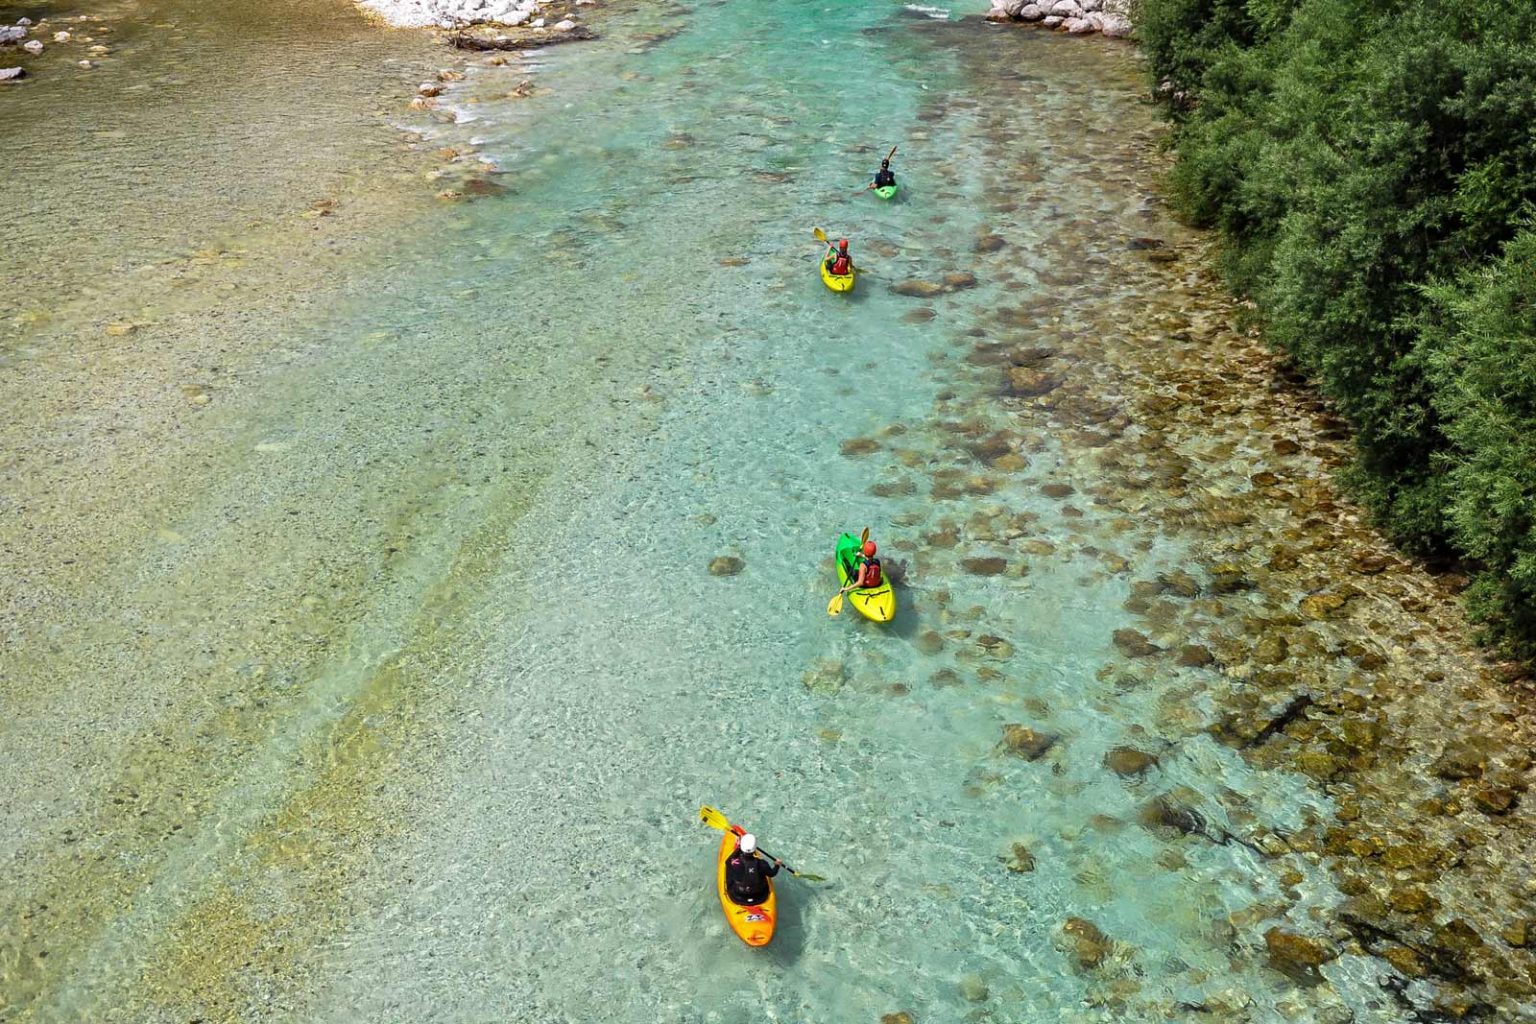 Guided sit-on-top kayak trip